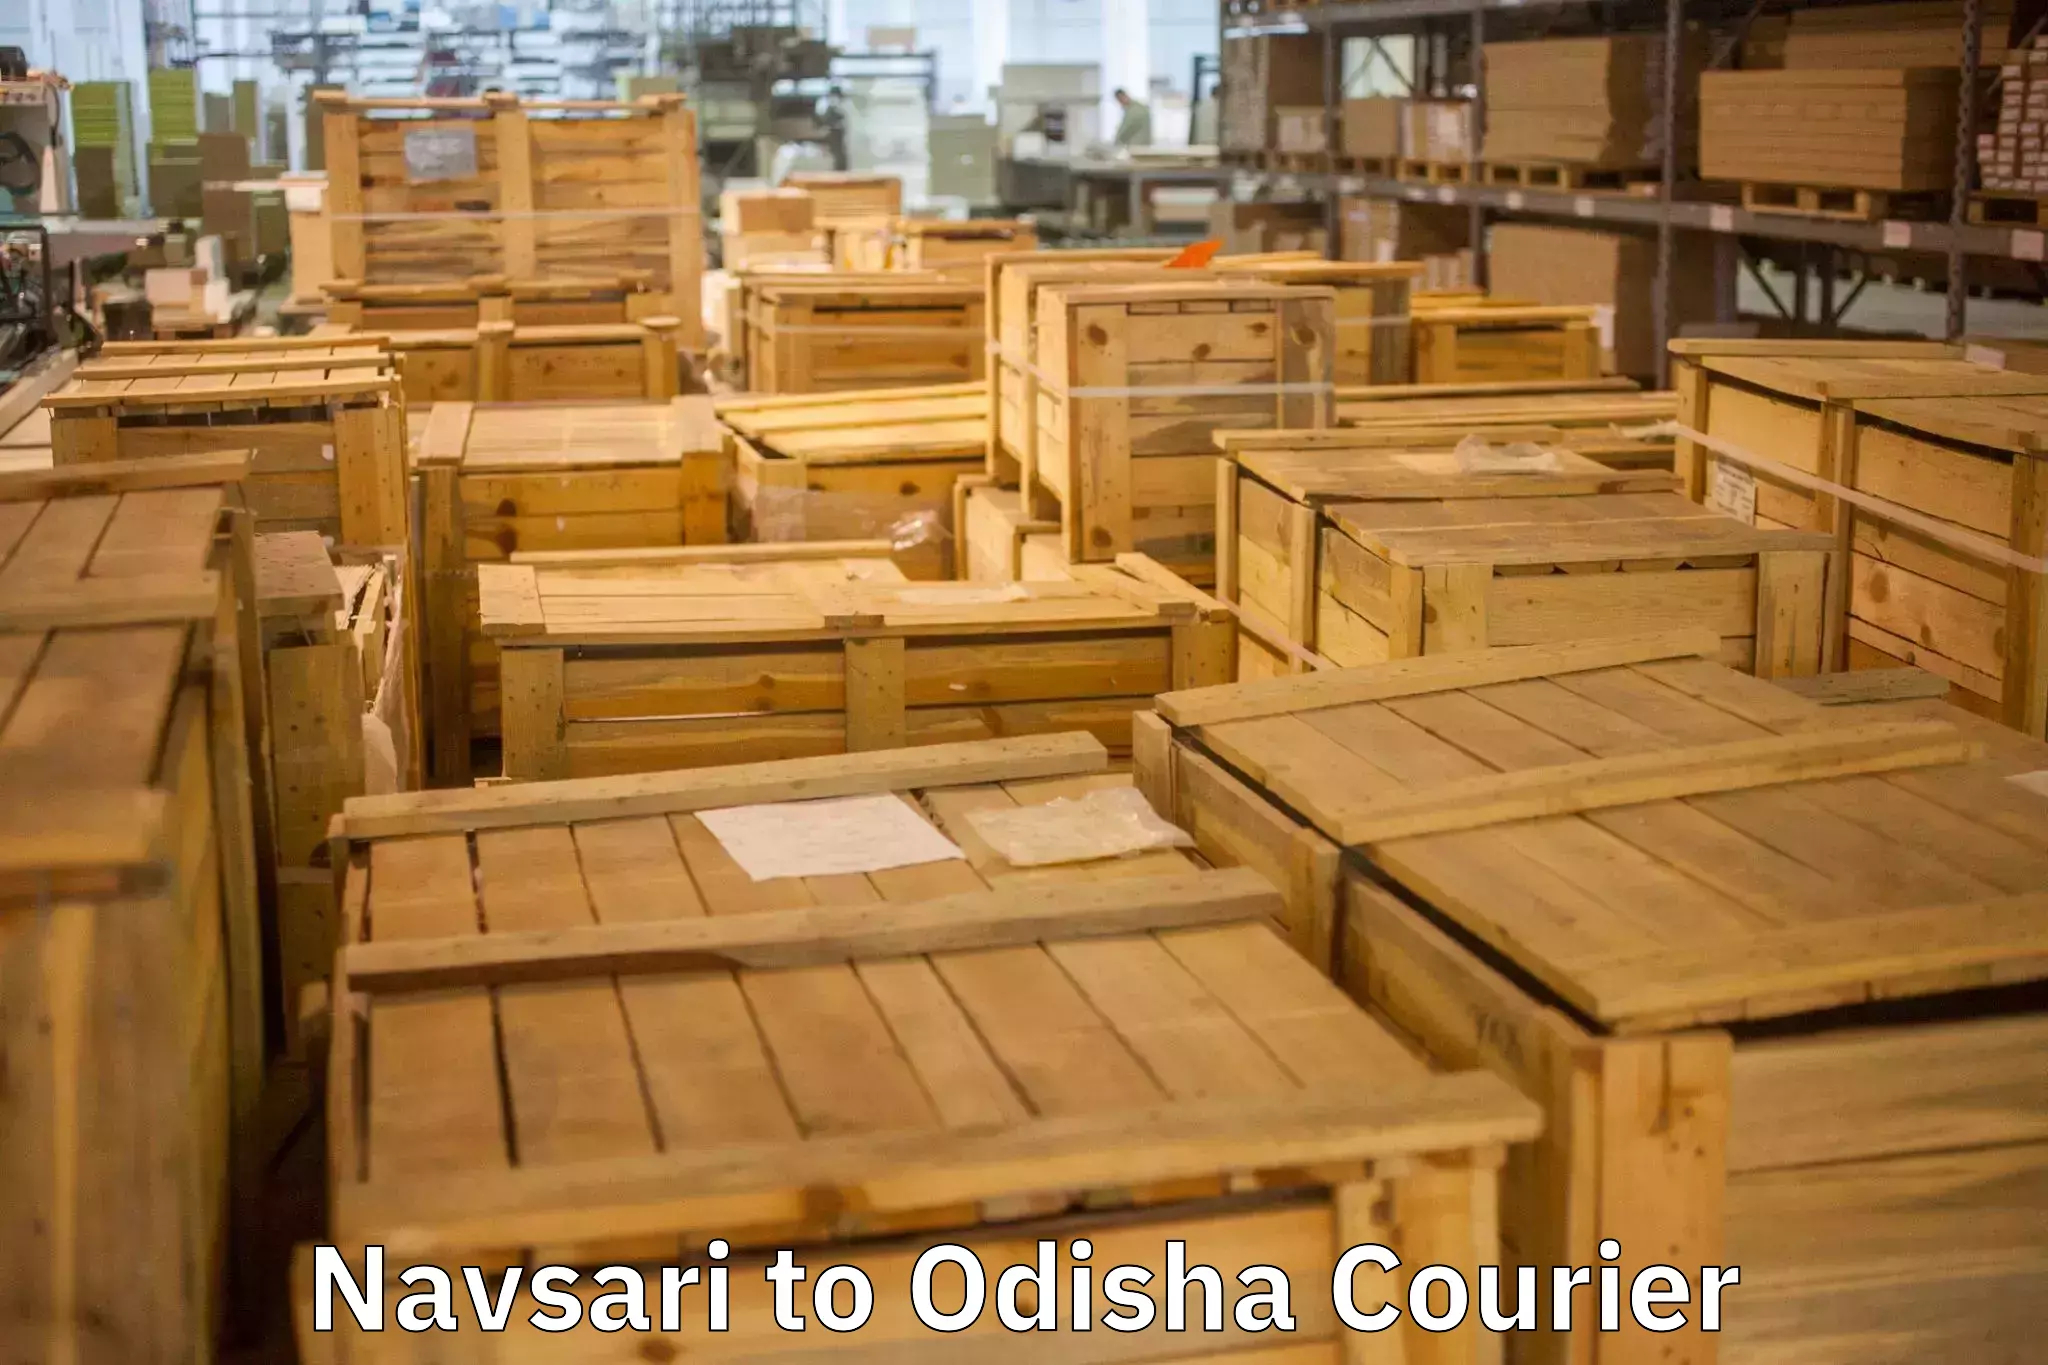 Furniture delivery service Navsari to Udala